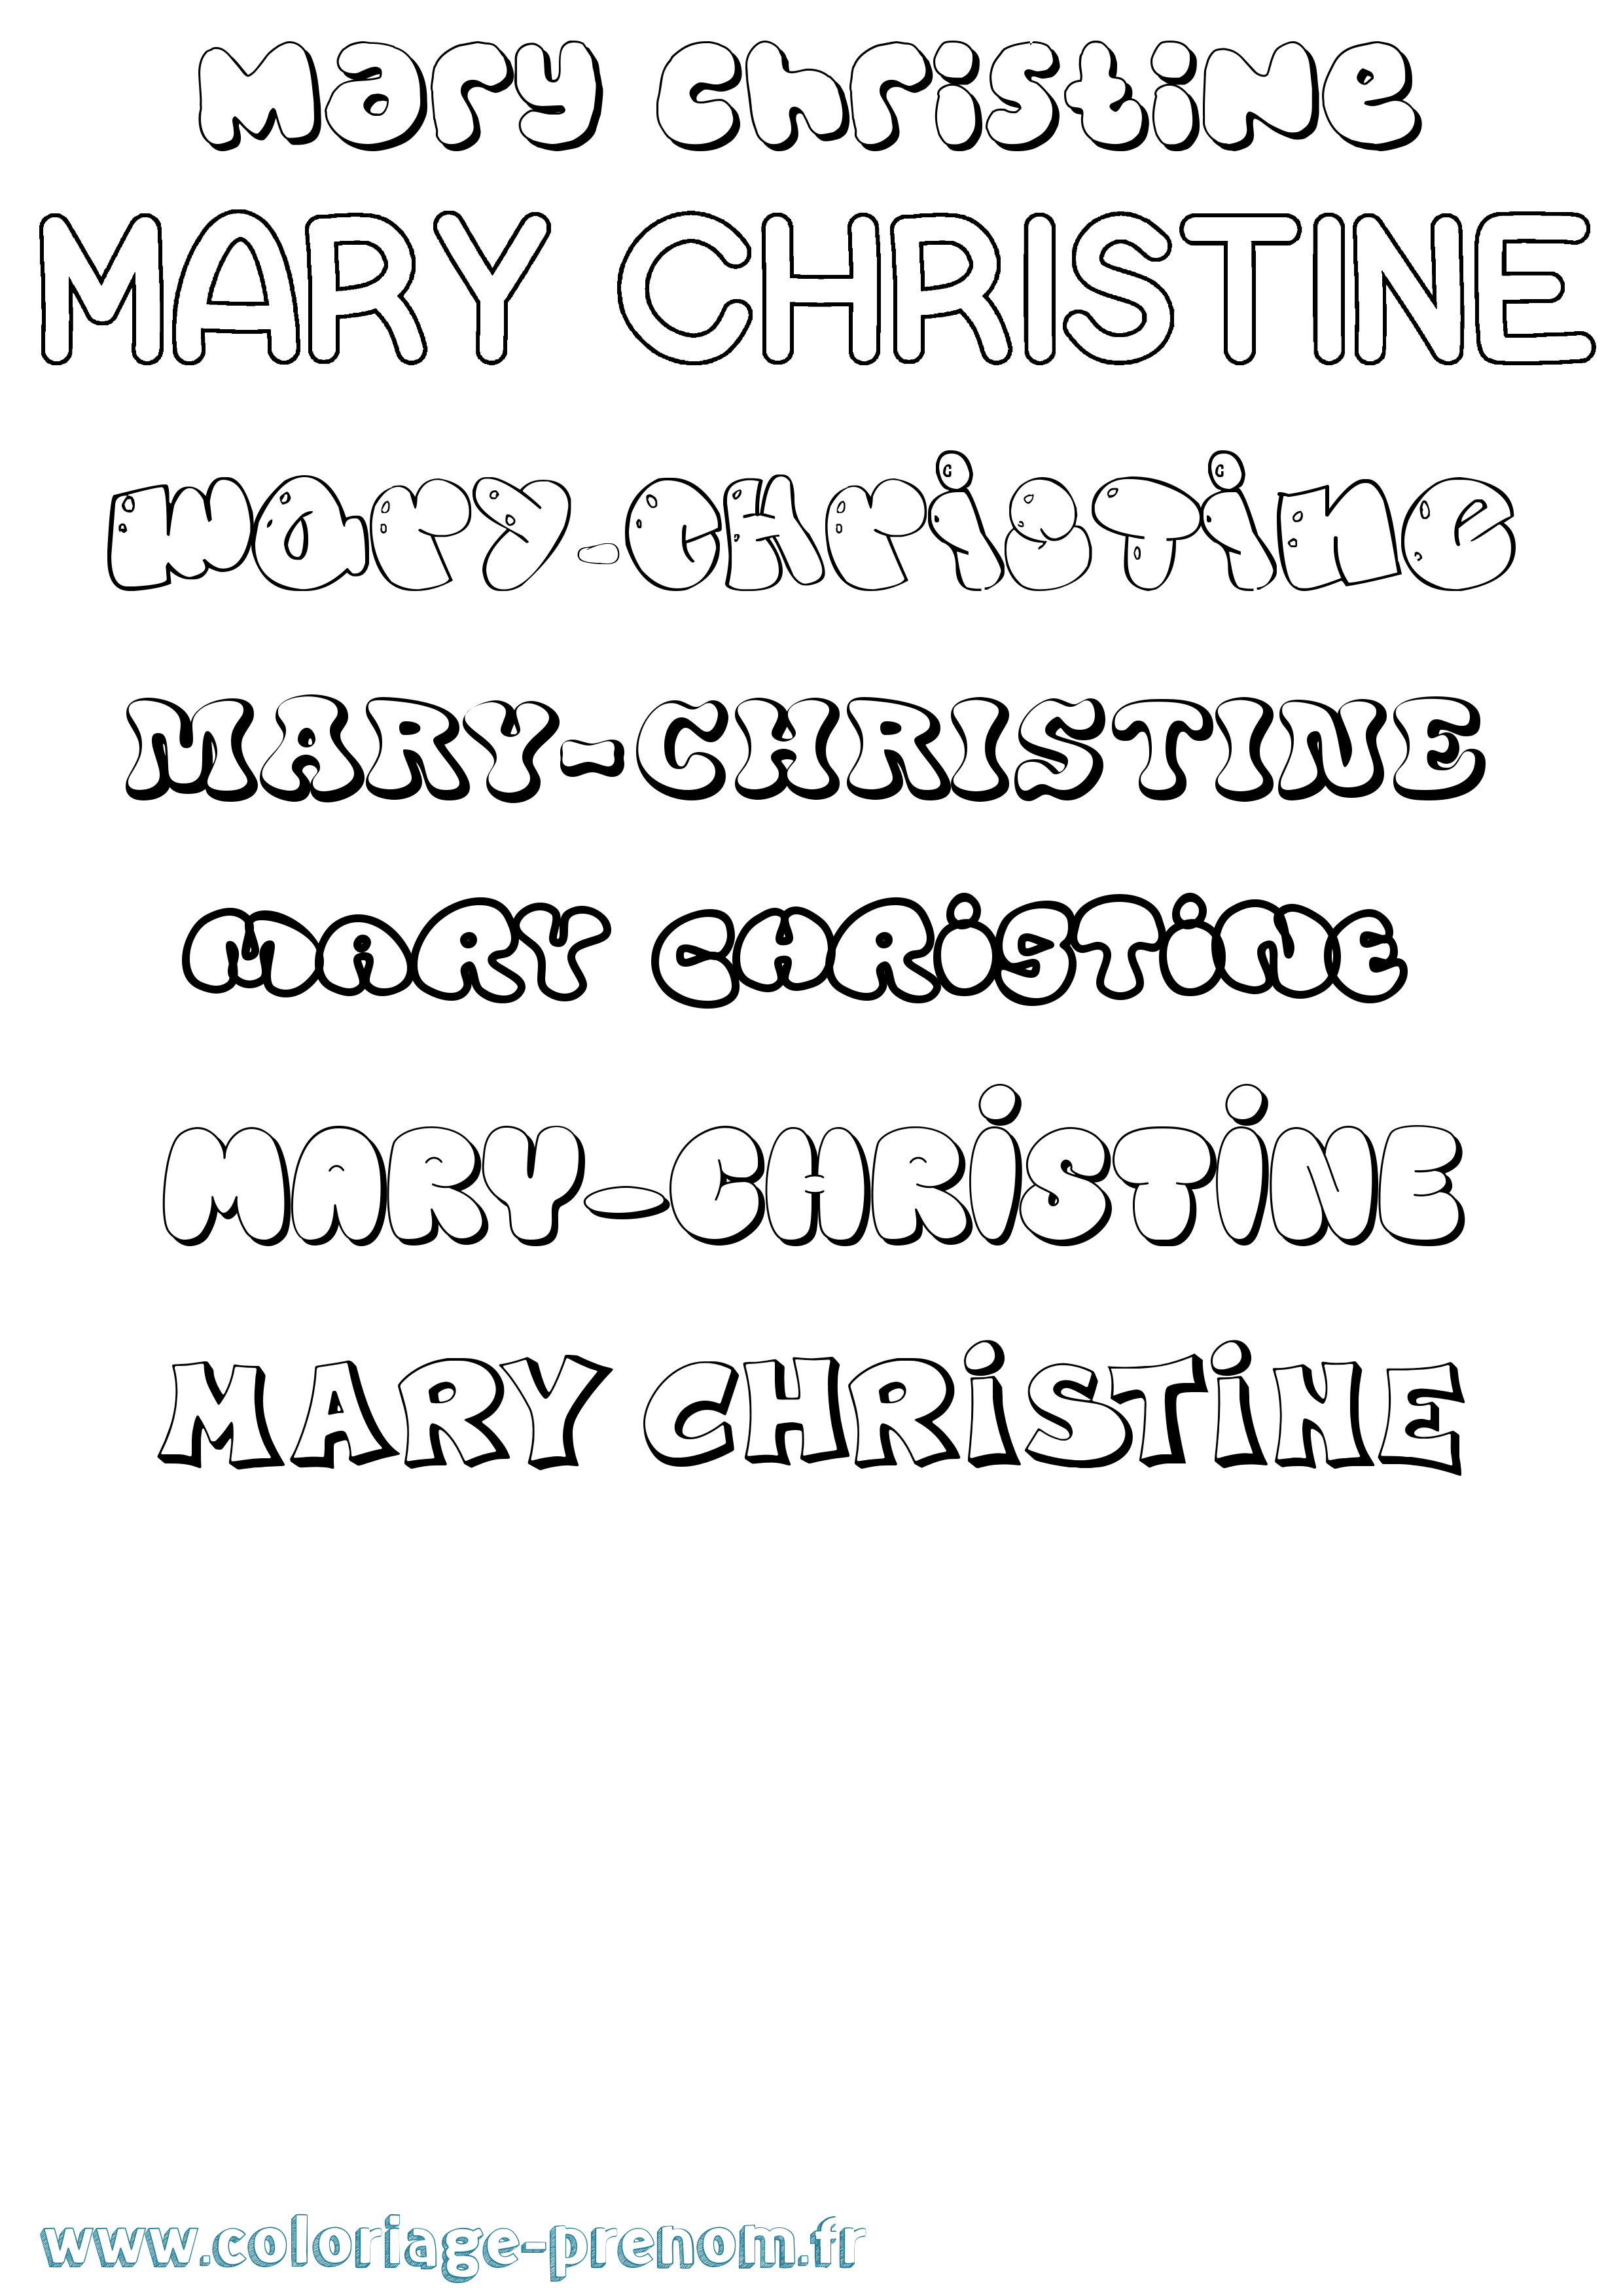 Coloriage prénom Mary-Christine Bubble